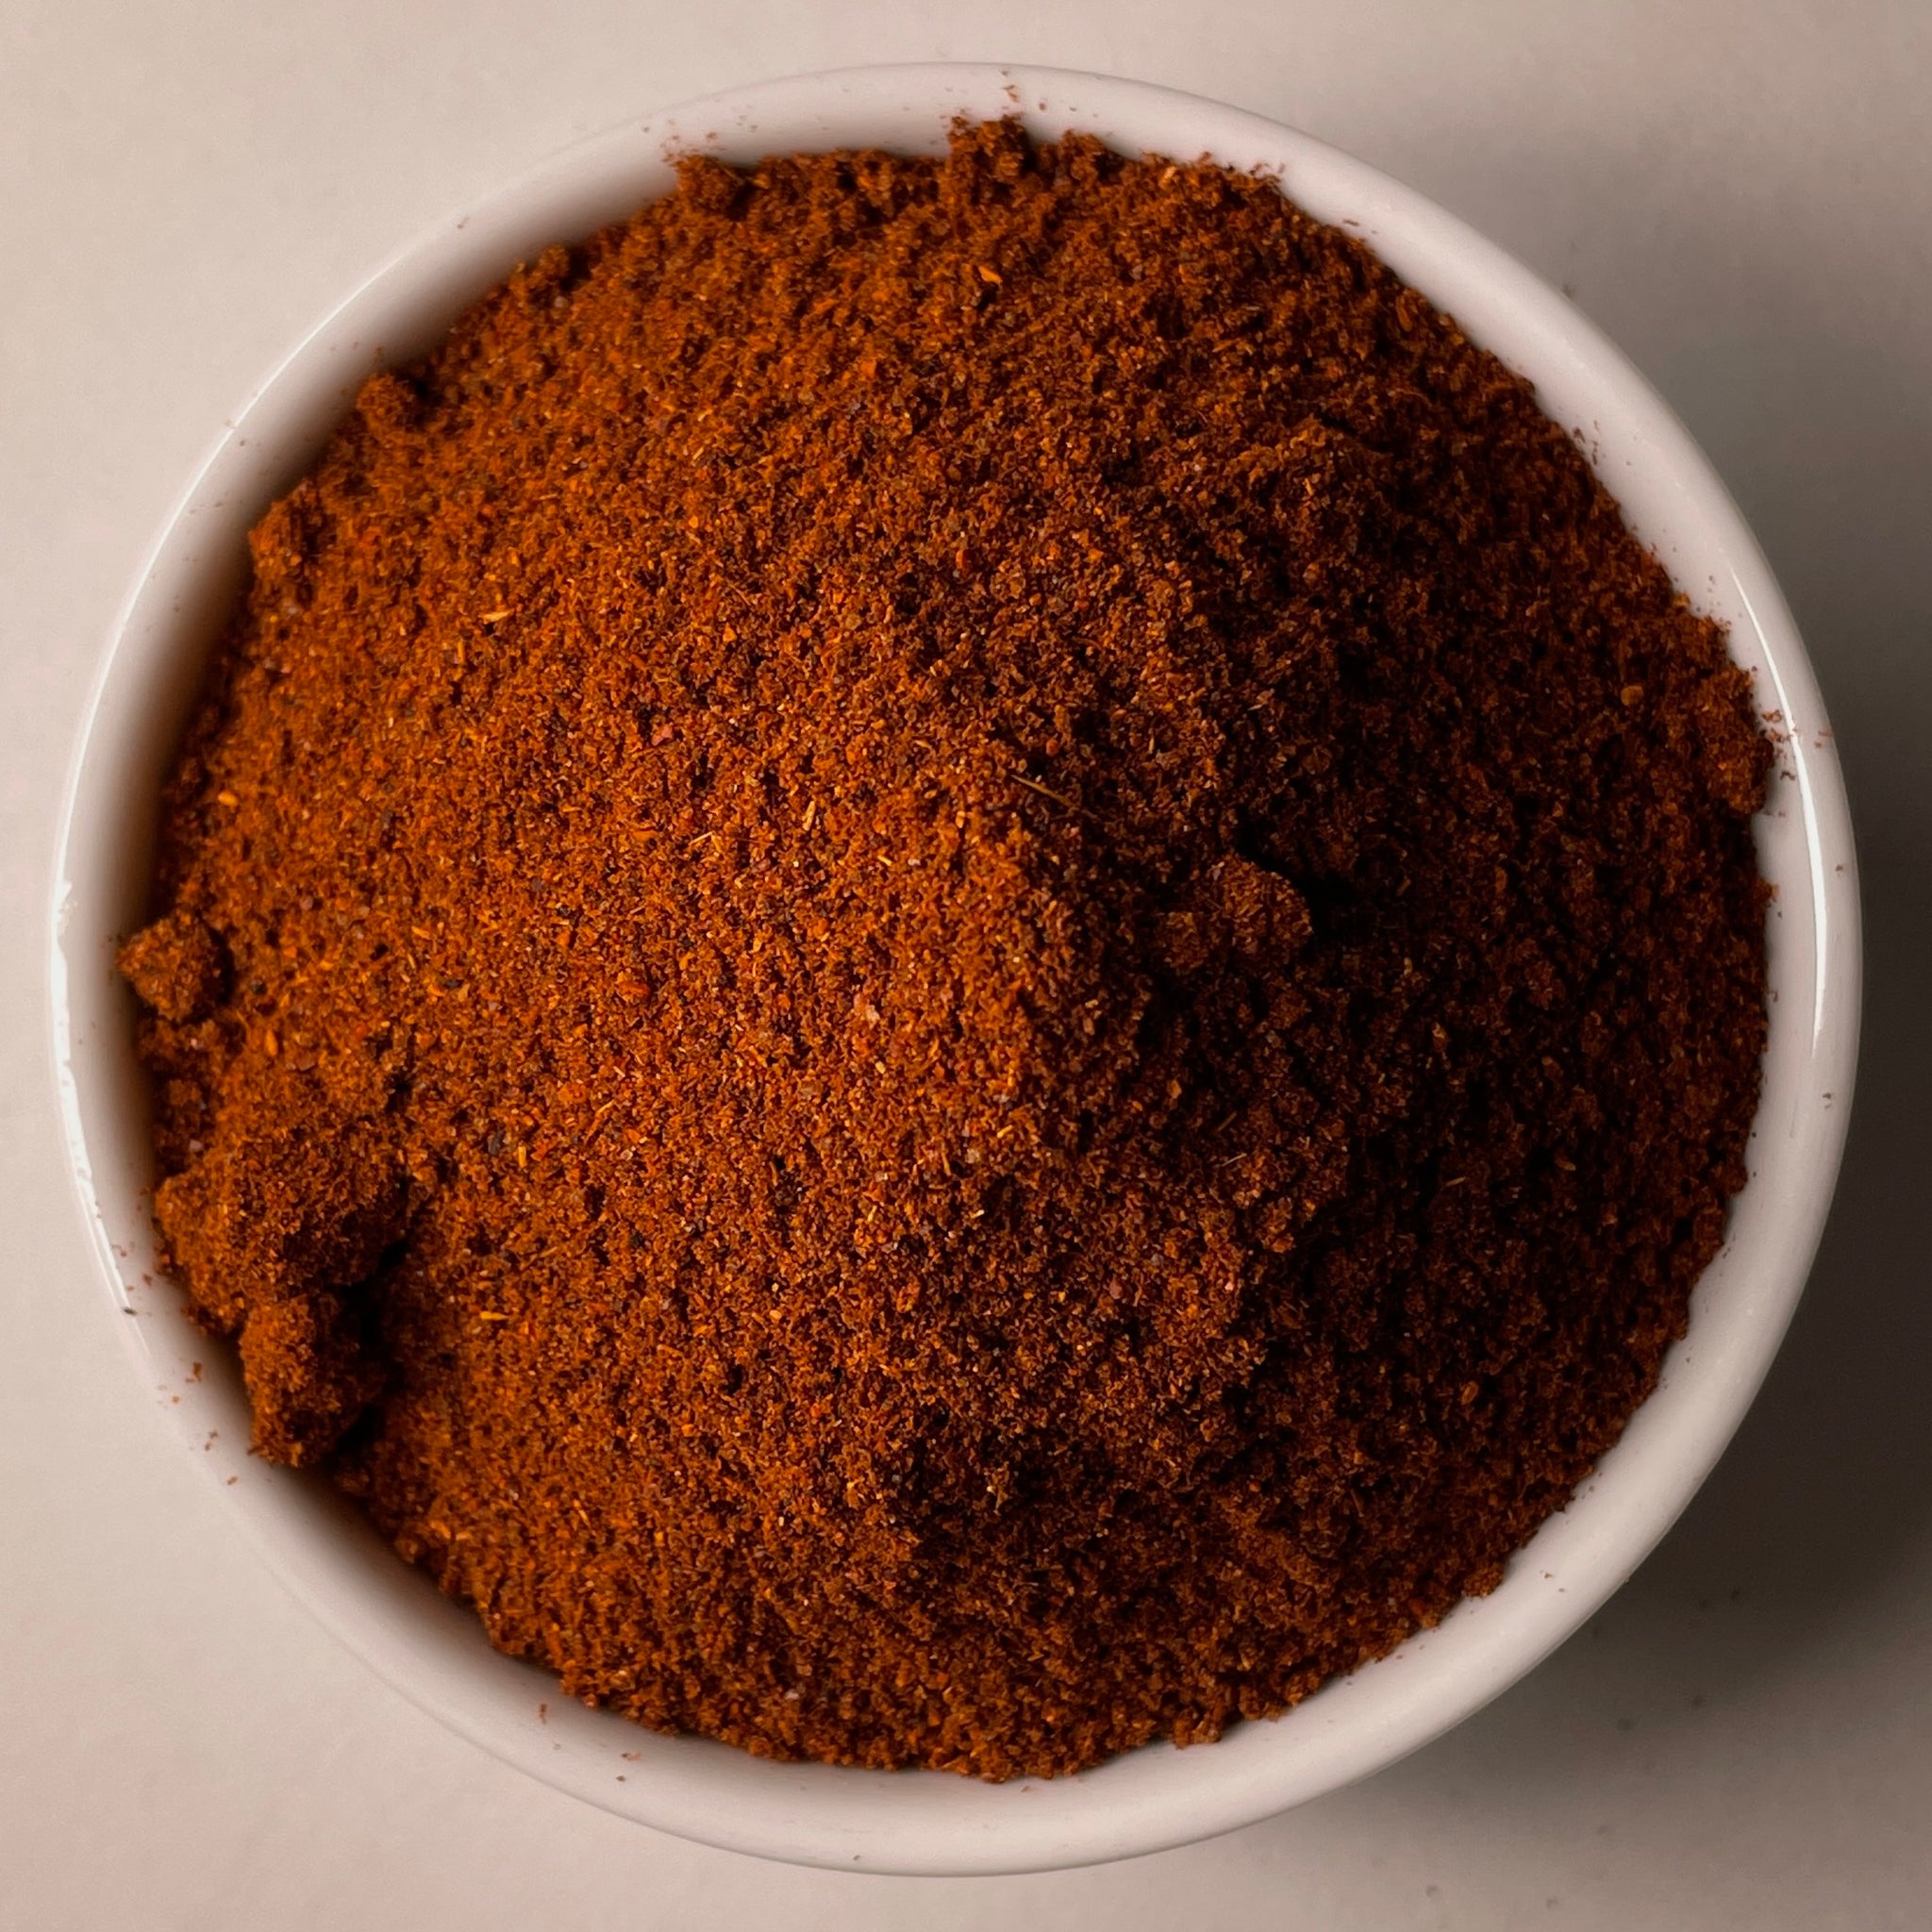 Mexican Chili Powder